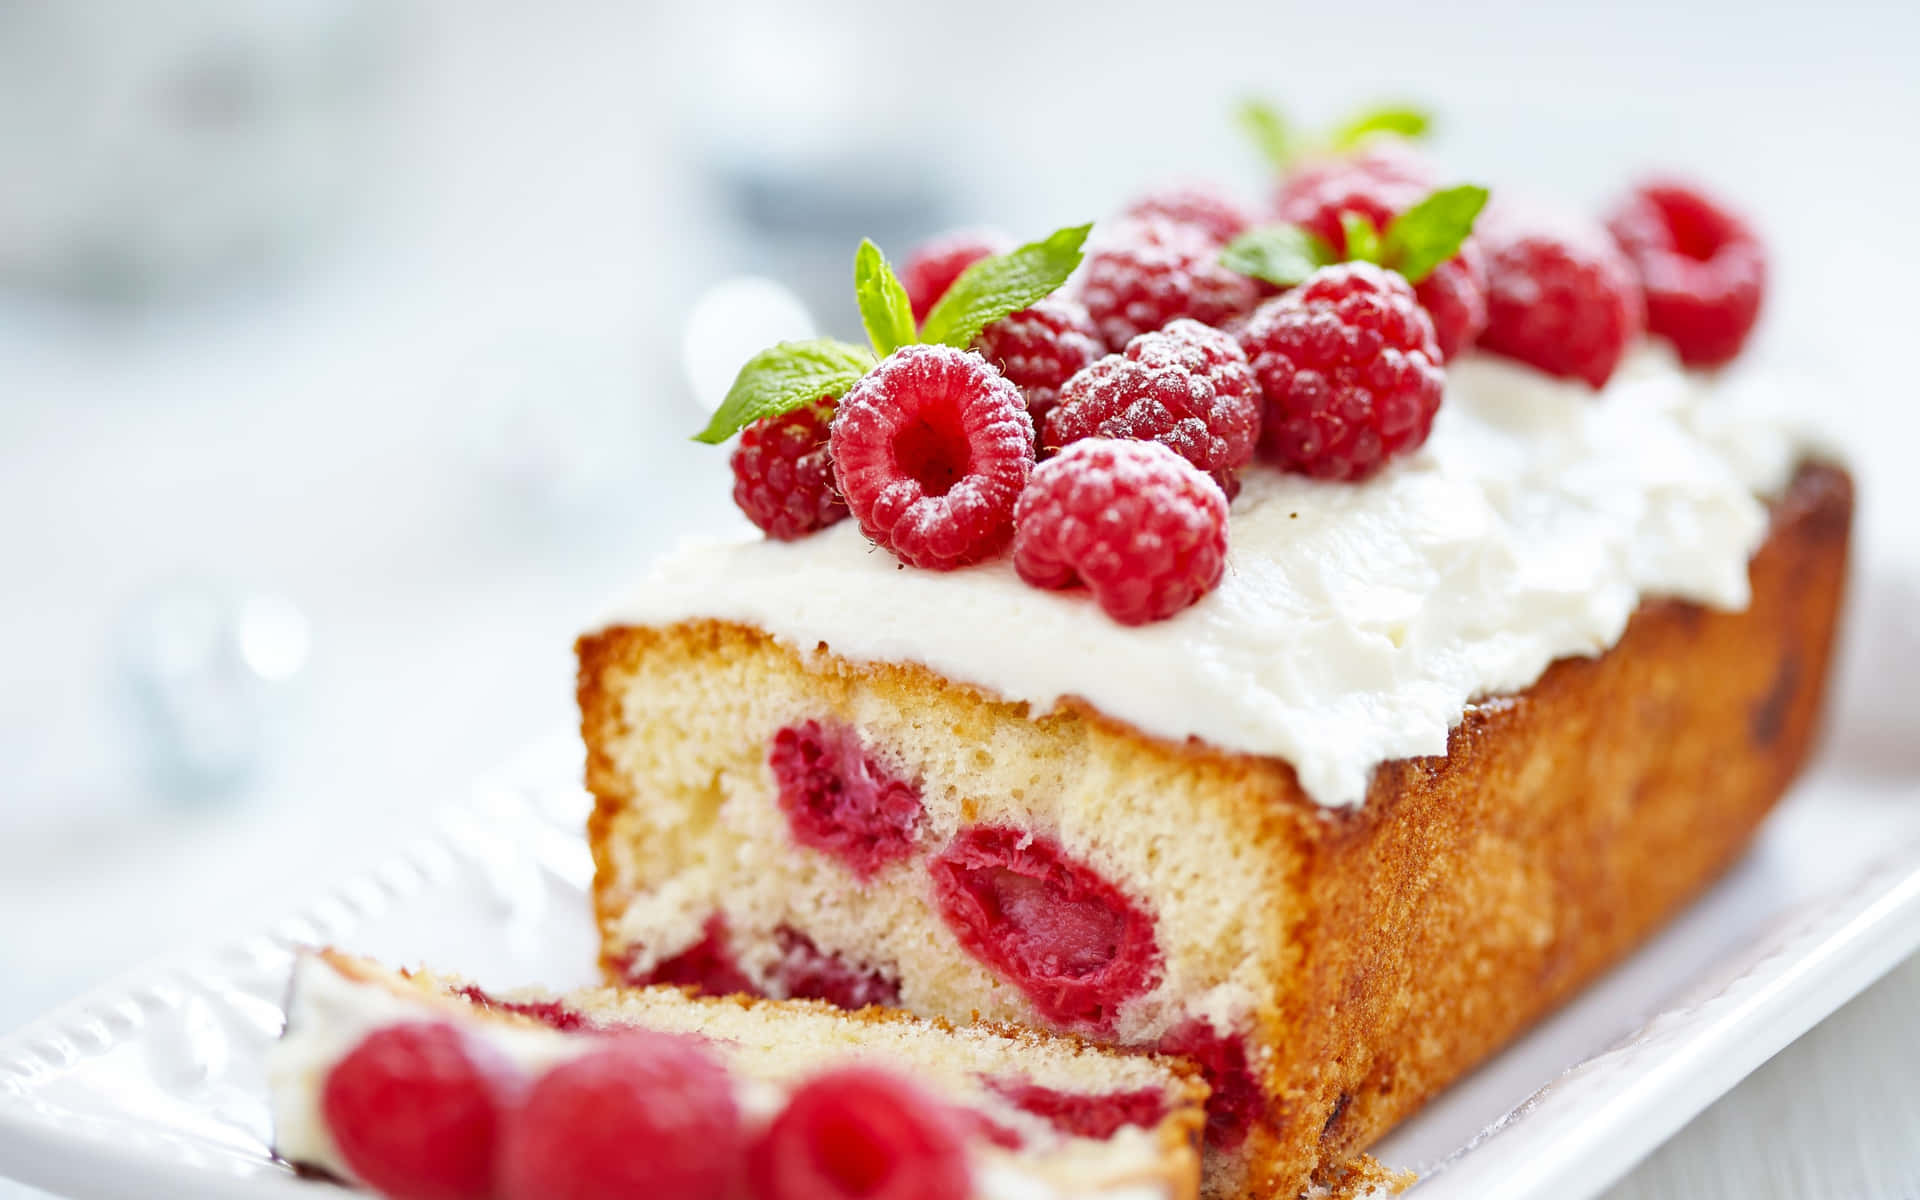 Enjoy this heavenly matcha and cream dessert!